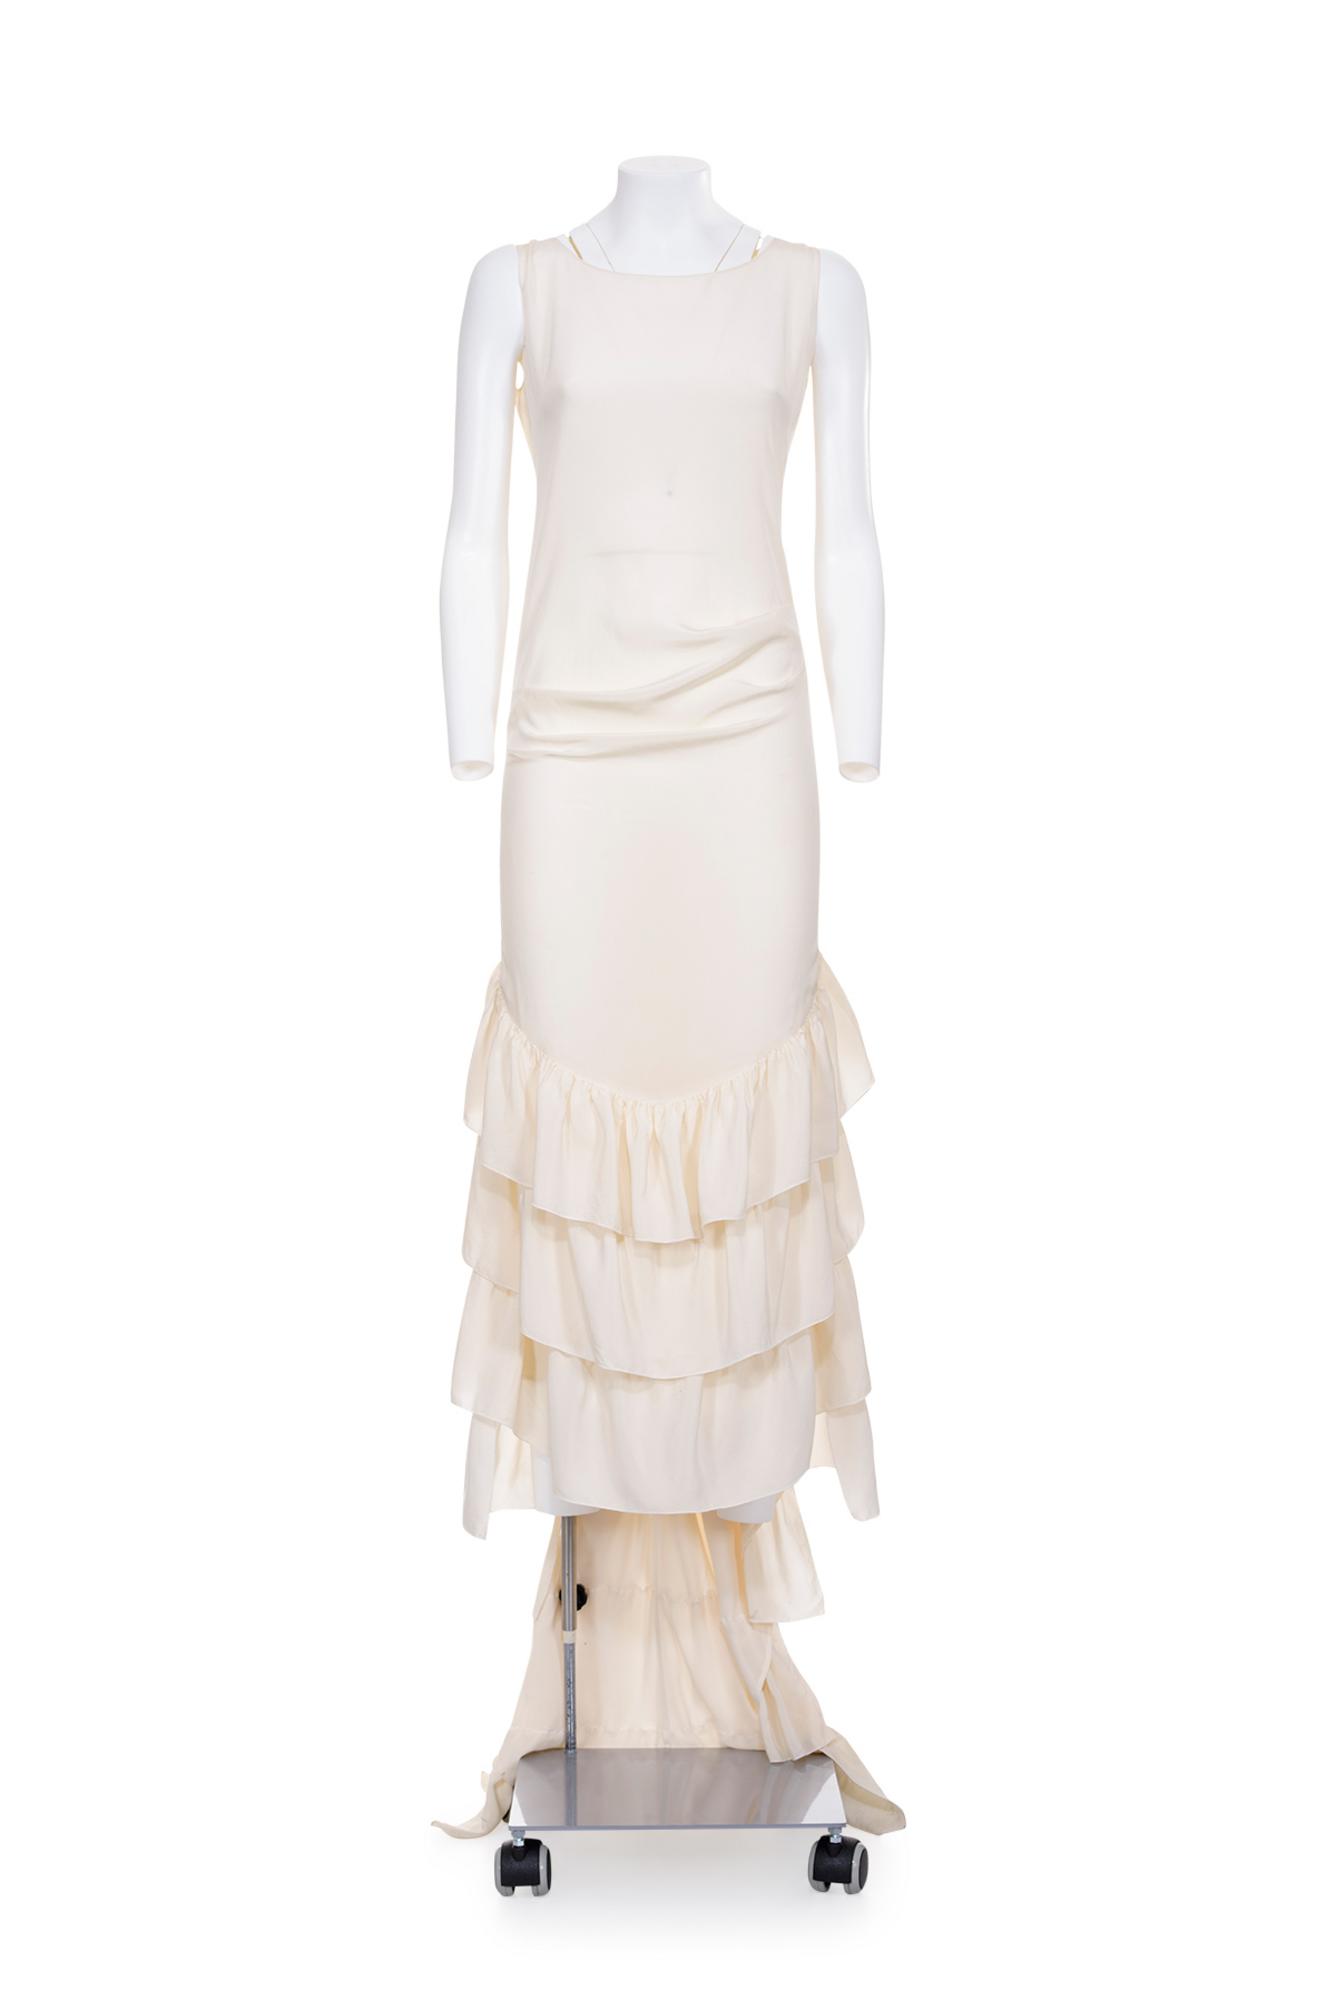 ALEXANDER McQUEEN Rare silk dress DESCRIPTION: Rare offwhite silk dress with...